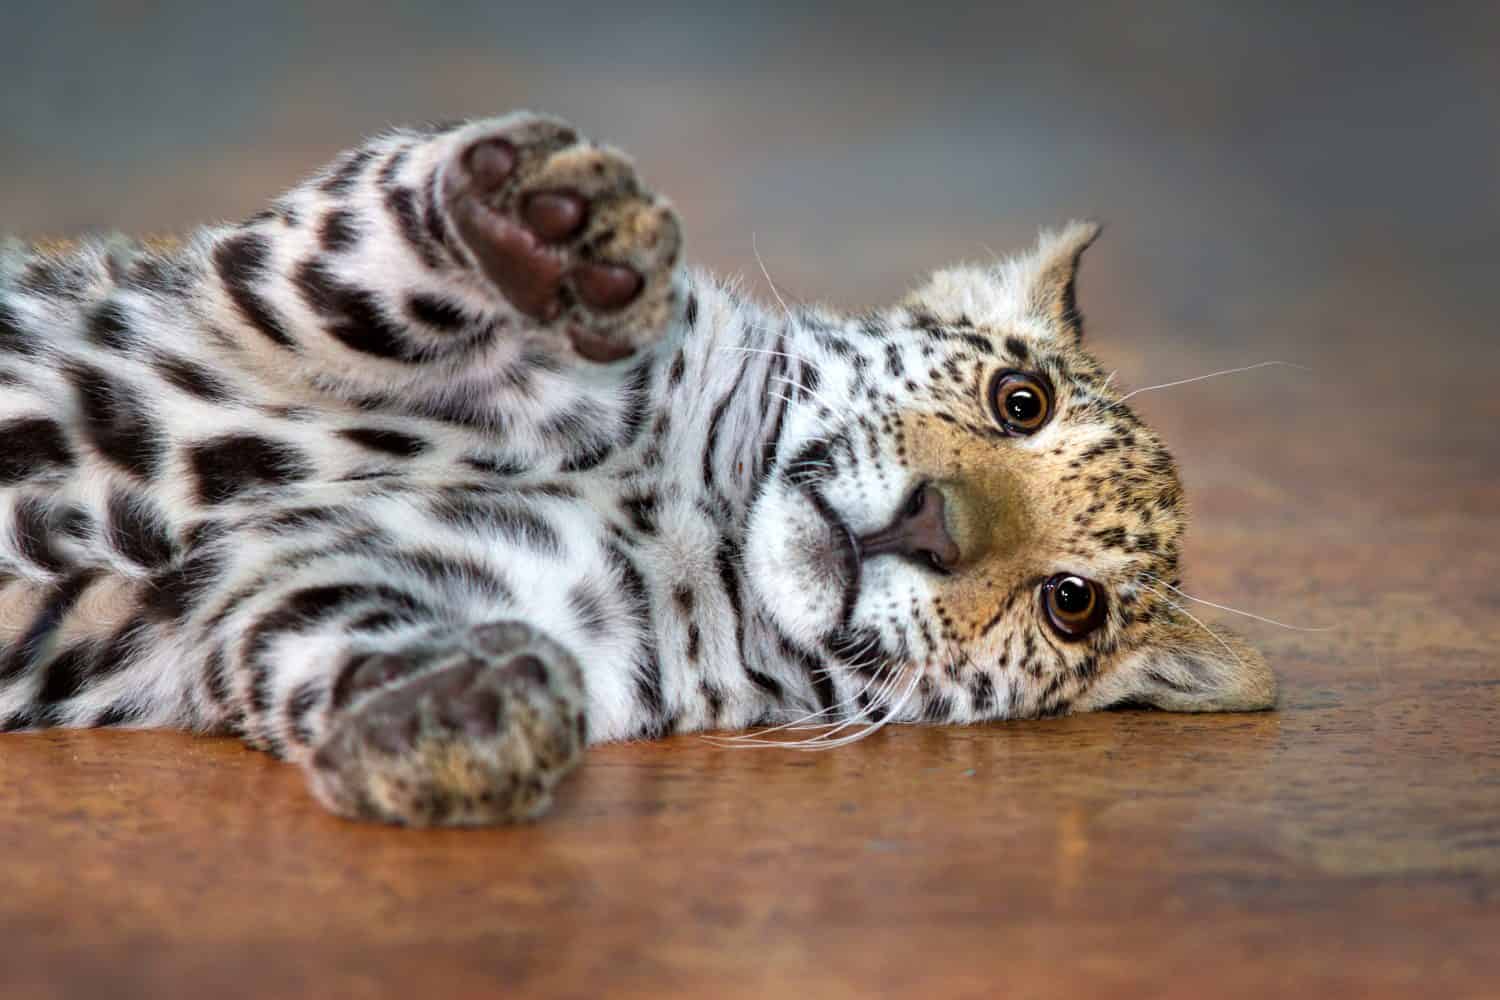 Beautiful baby jaguar lay funny